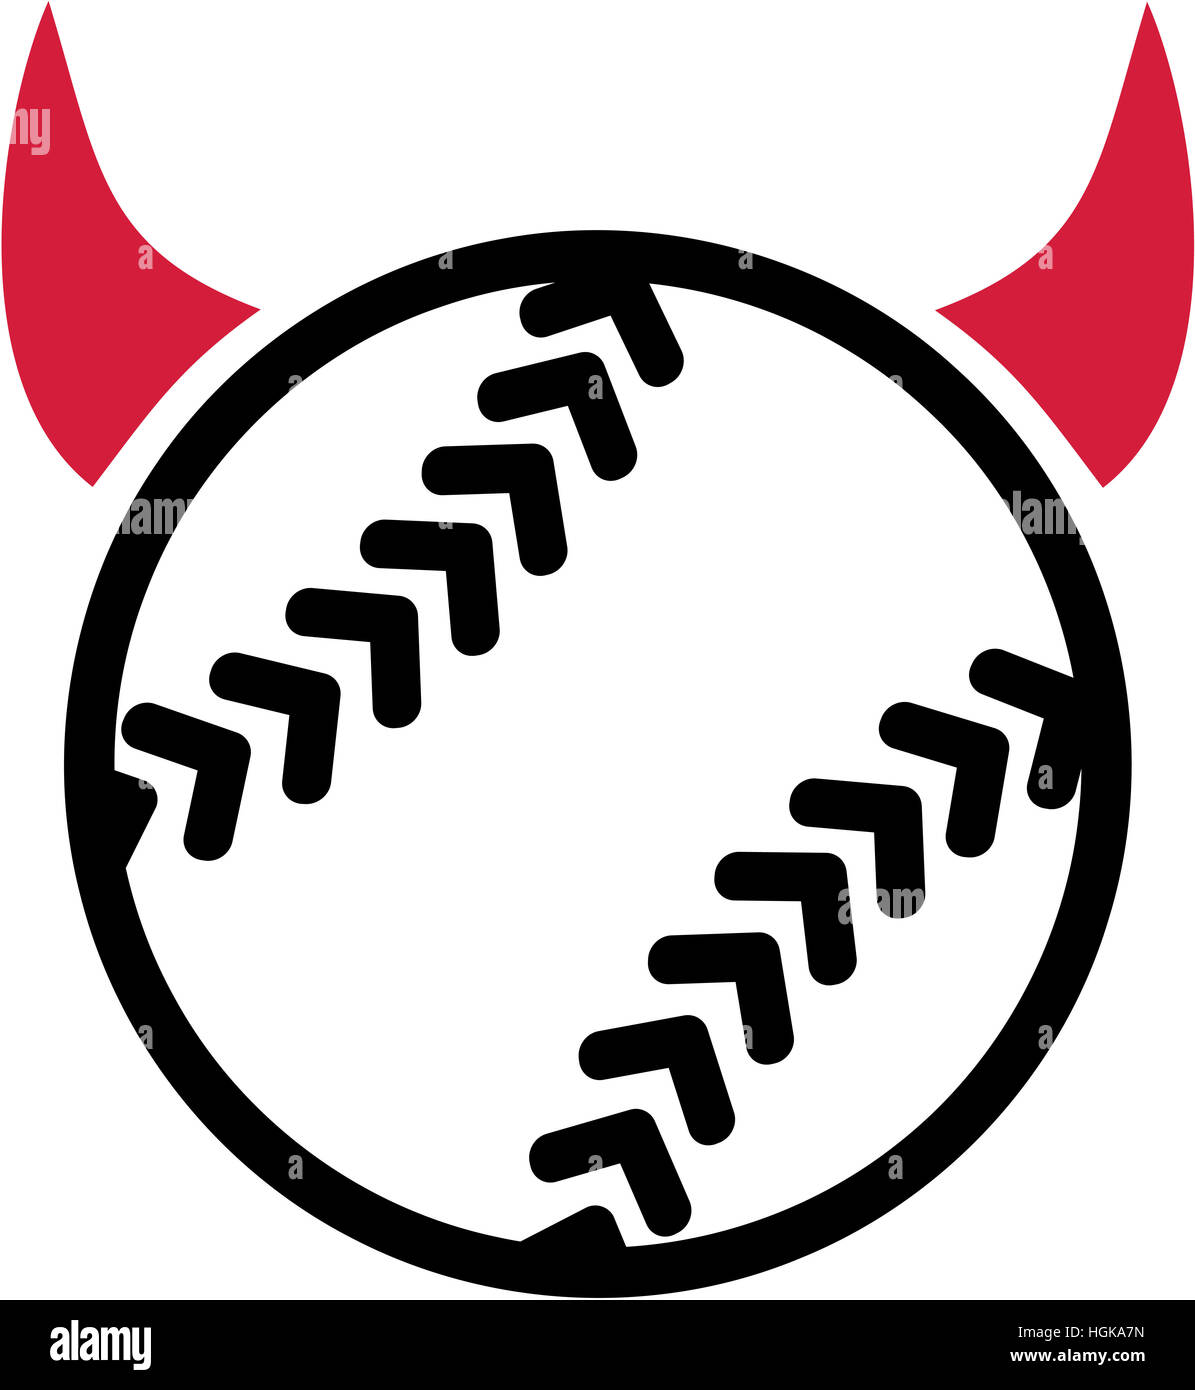 Softball with devil horns Stock Photo